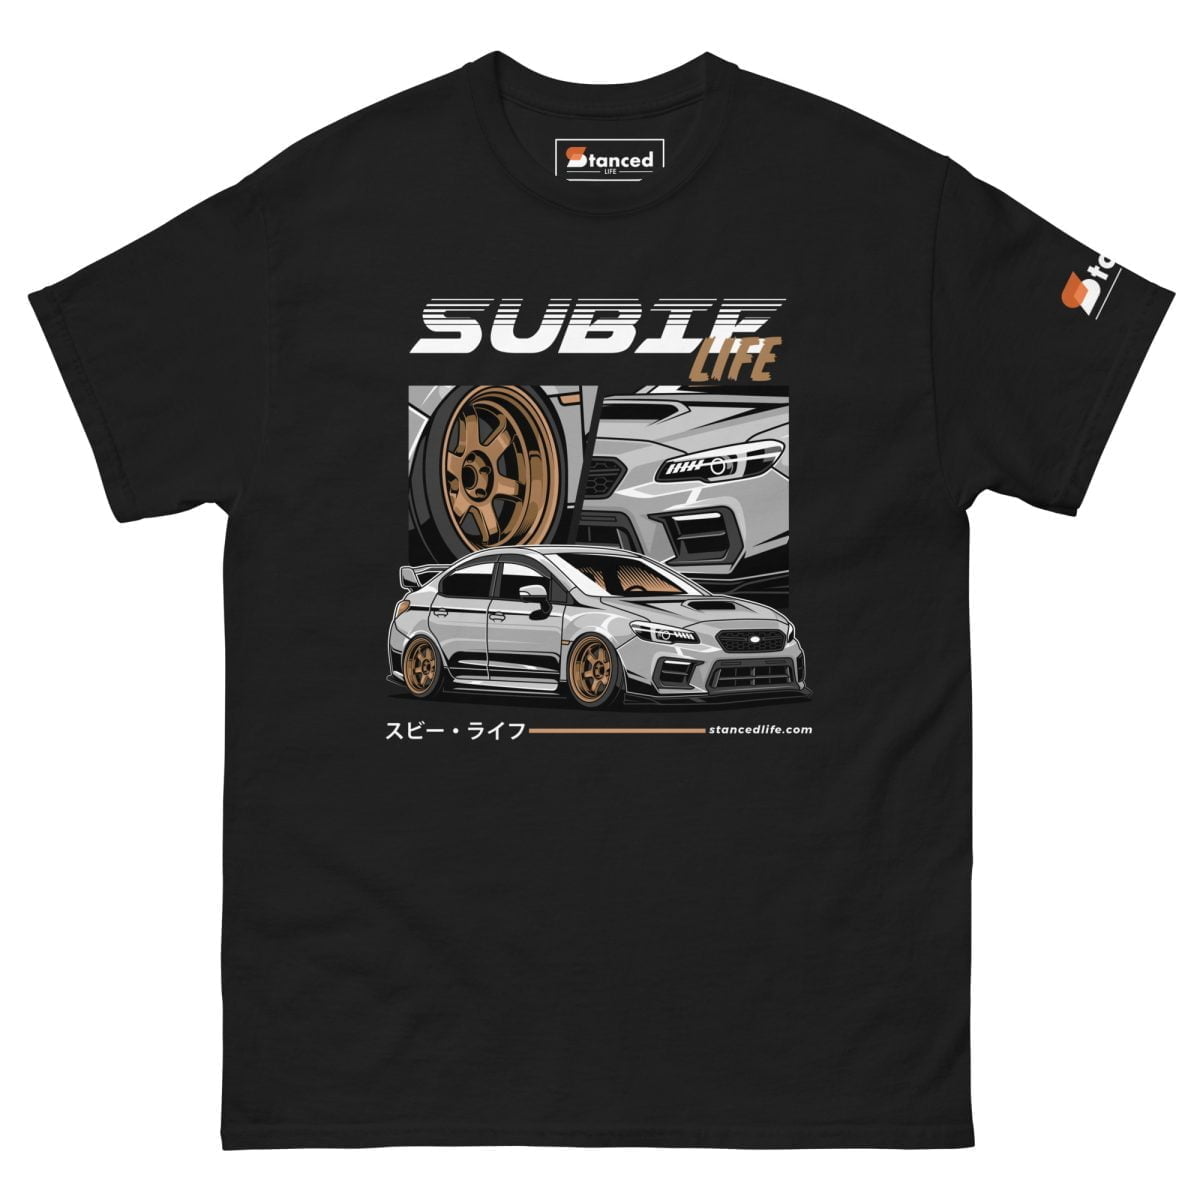 A Subaru WRX STI Subie Life mens classic t shirt perfect for Subie Life enthusiasts | StancedLife